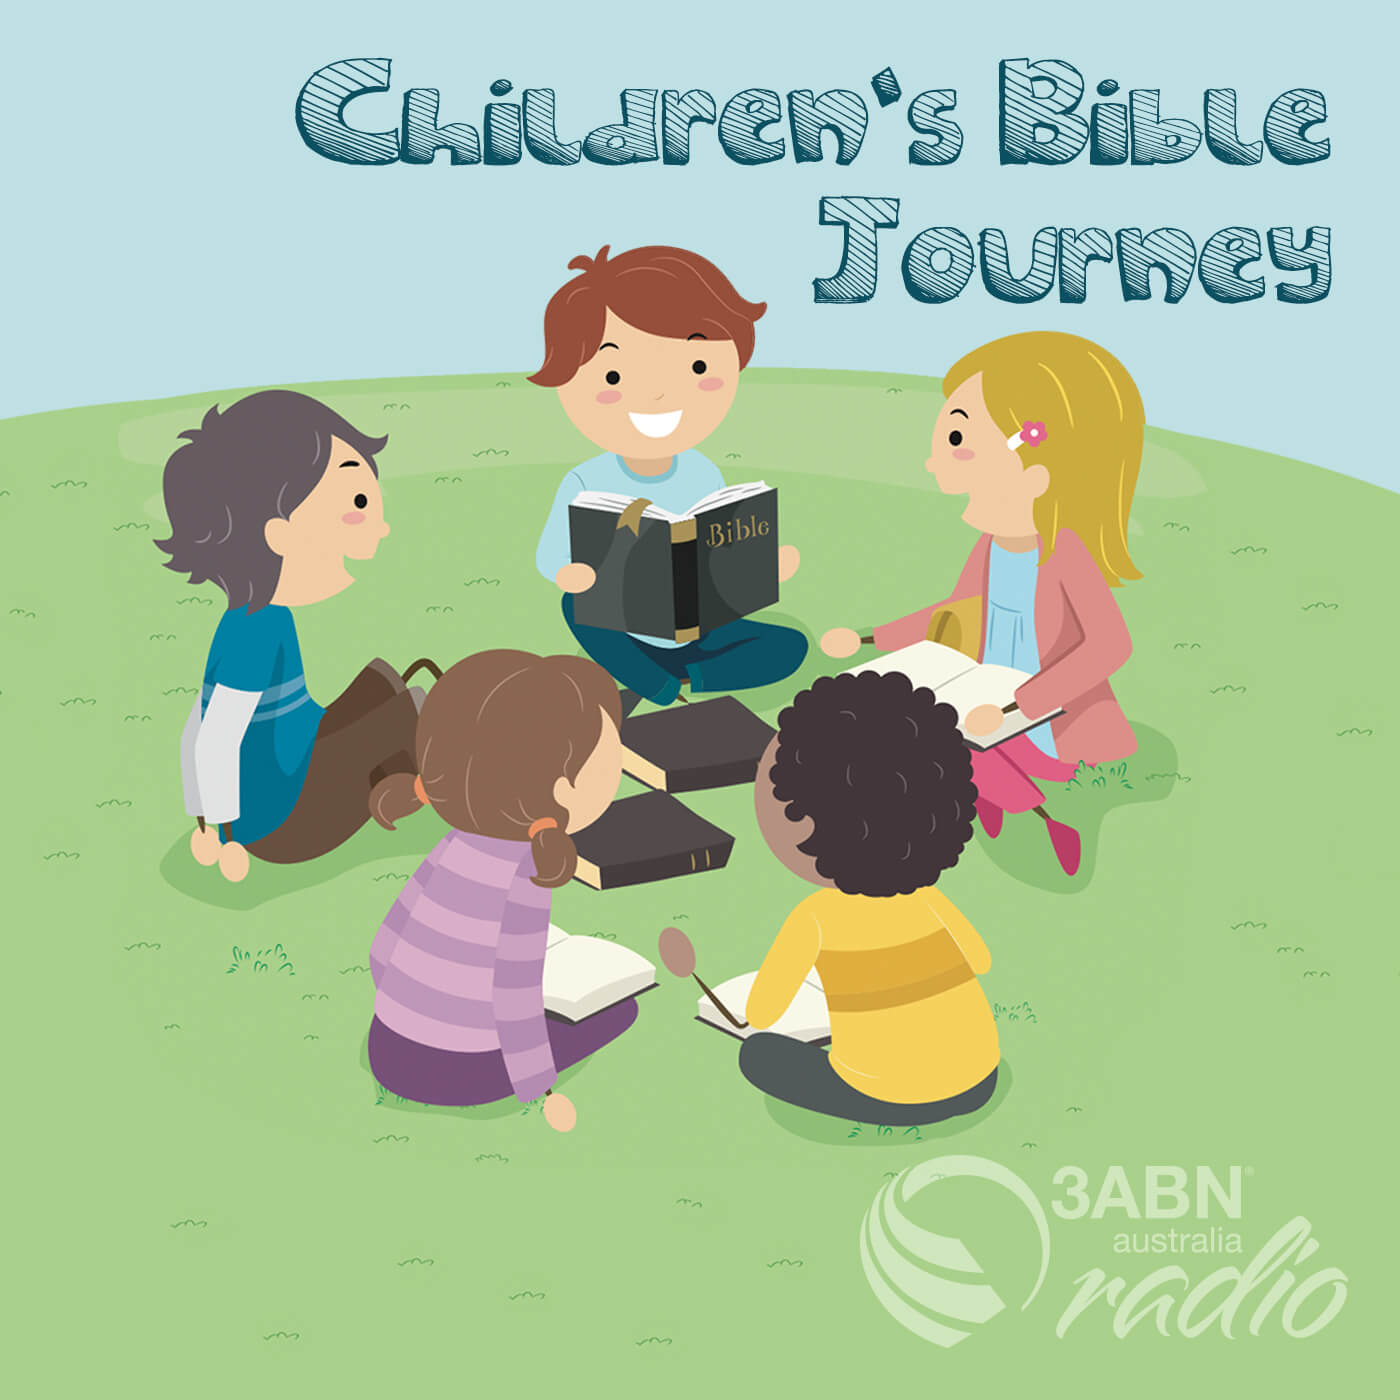 Children's Bible Journey - 2199